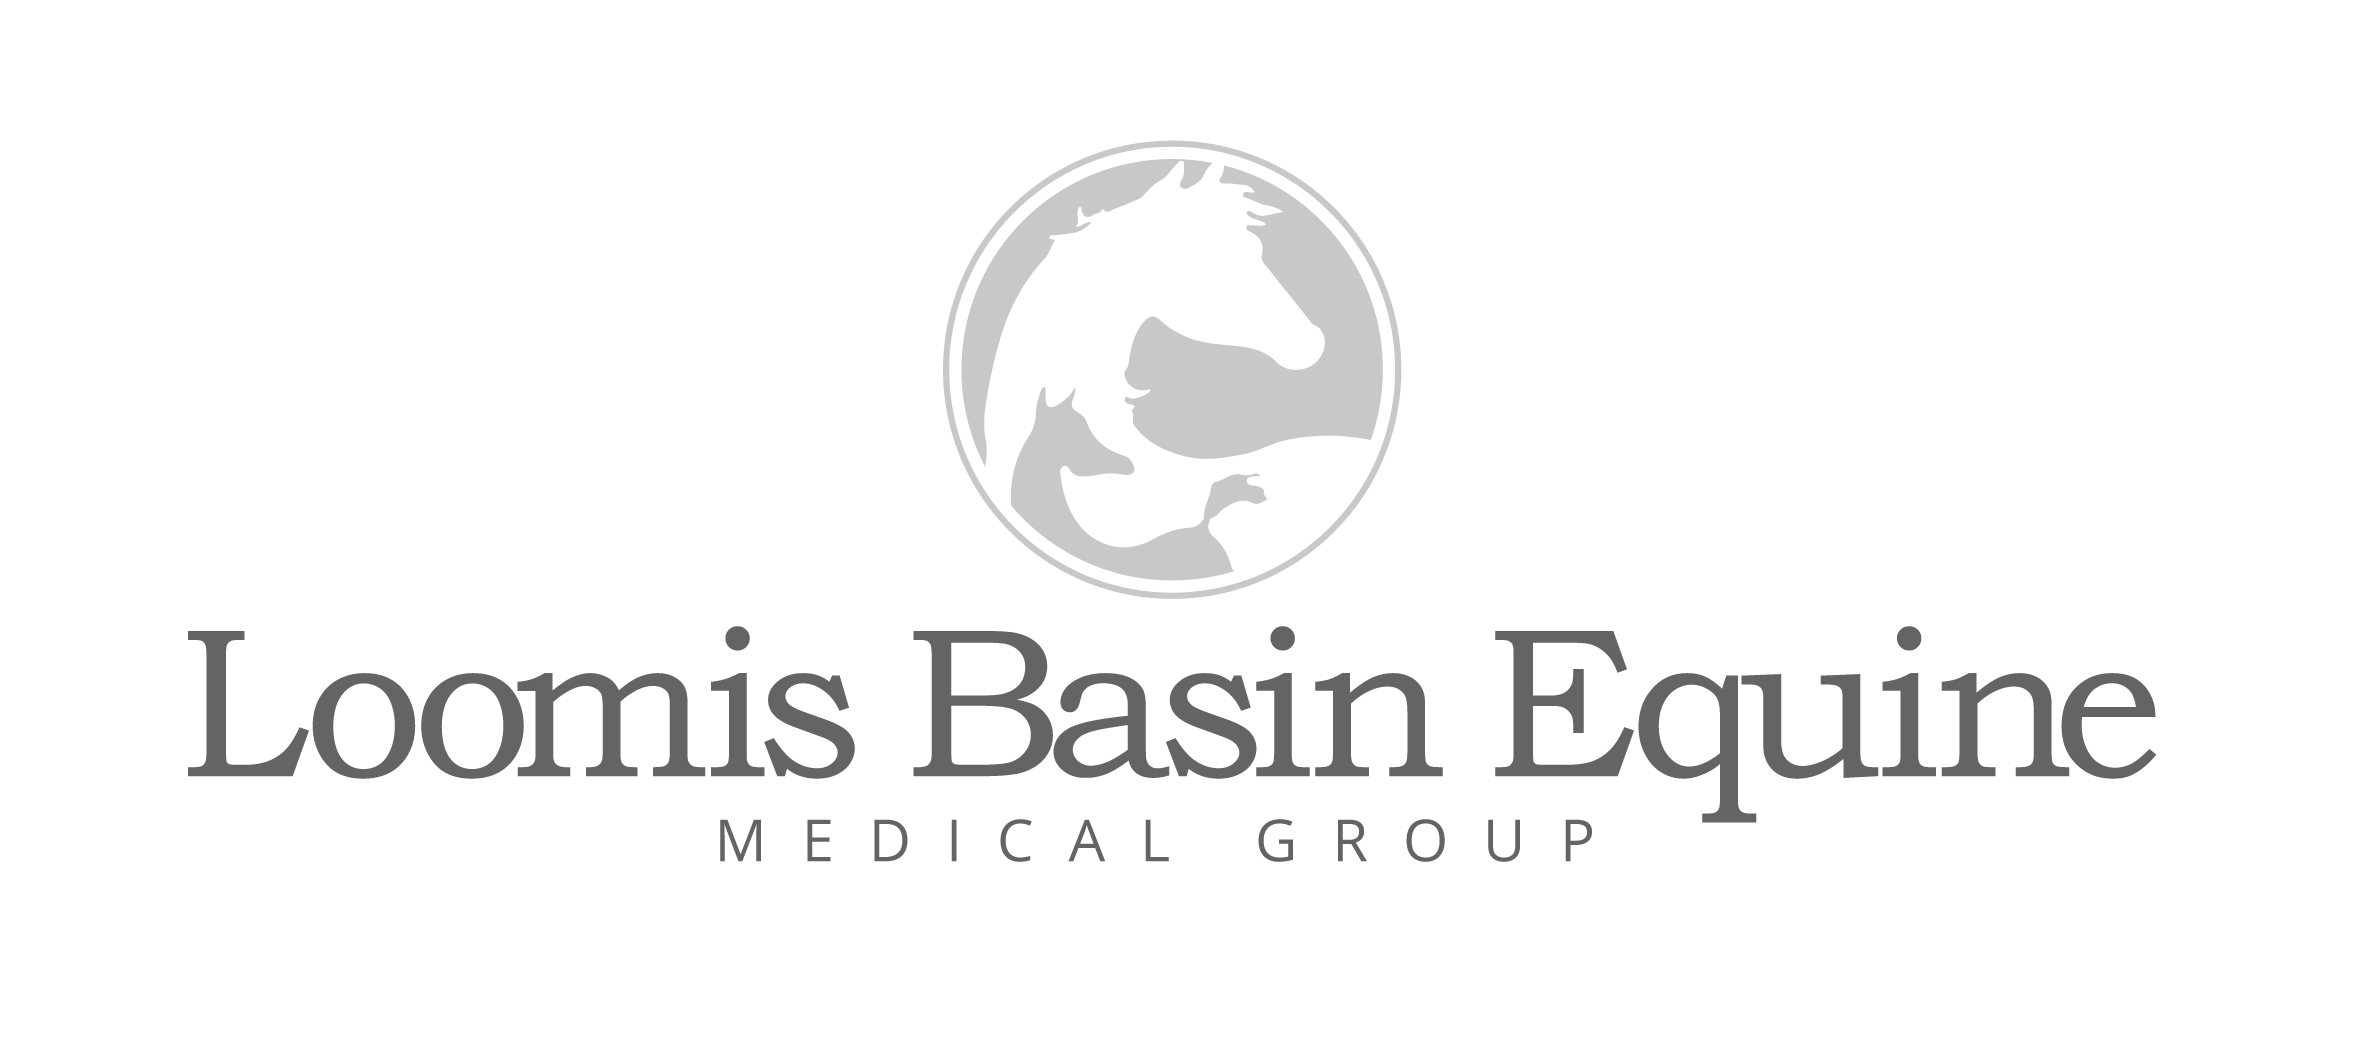 Loomis Basin Equine Medical Group Logo